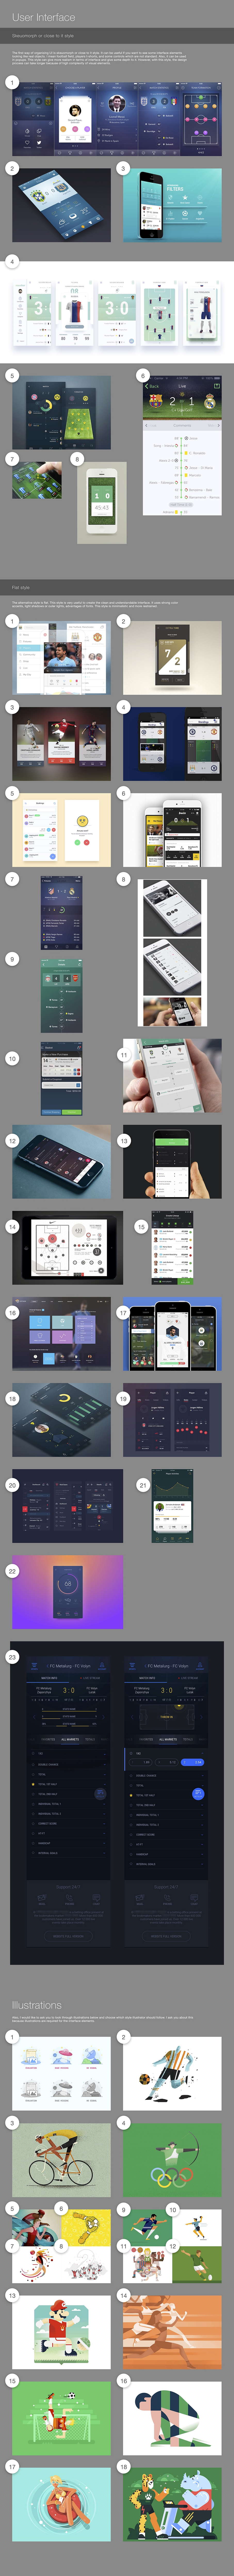 moodboard-sport-app-UI-design